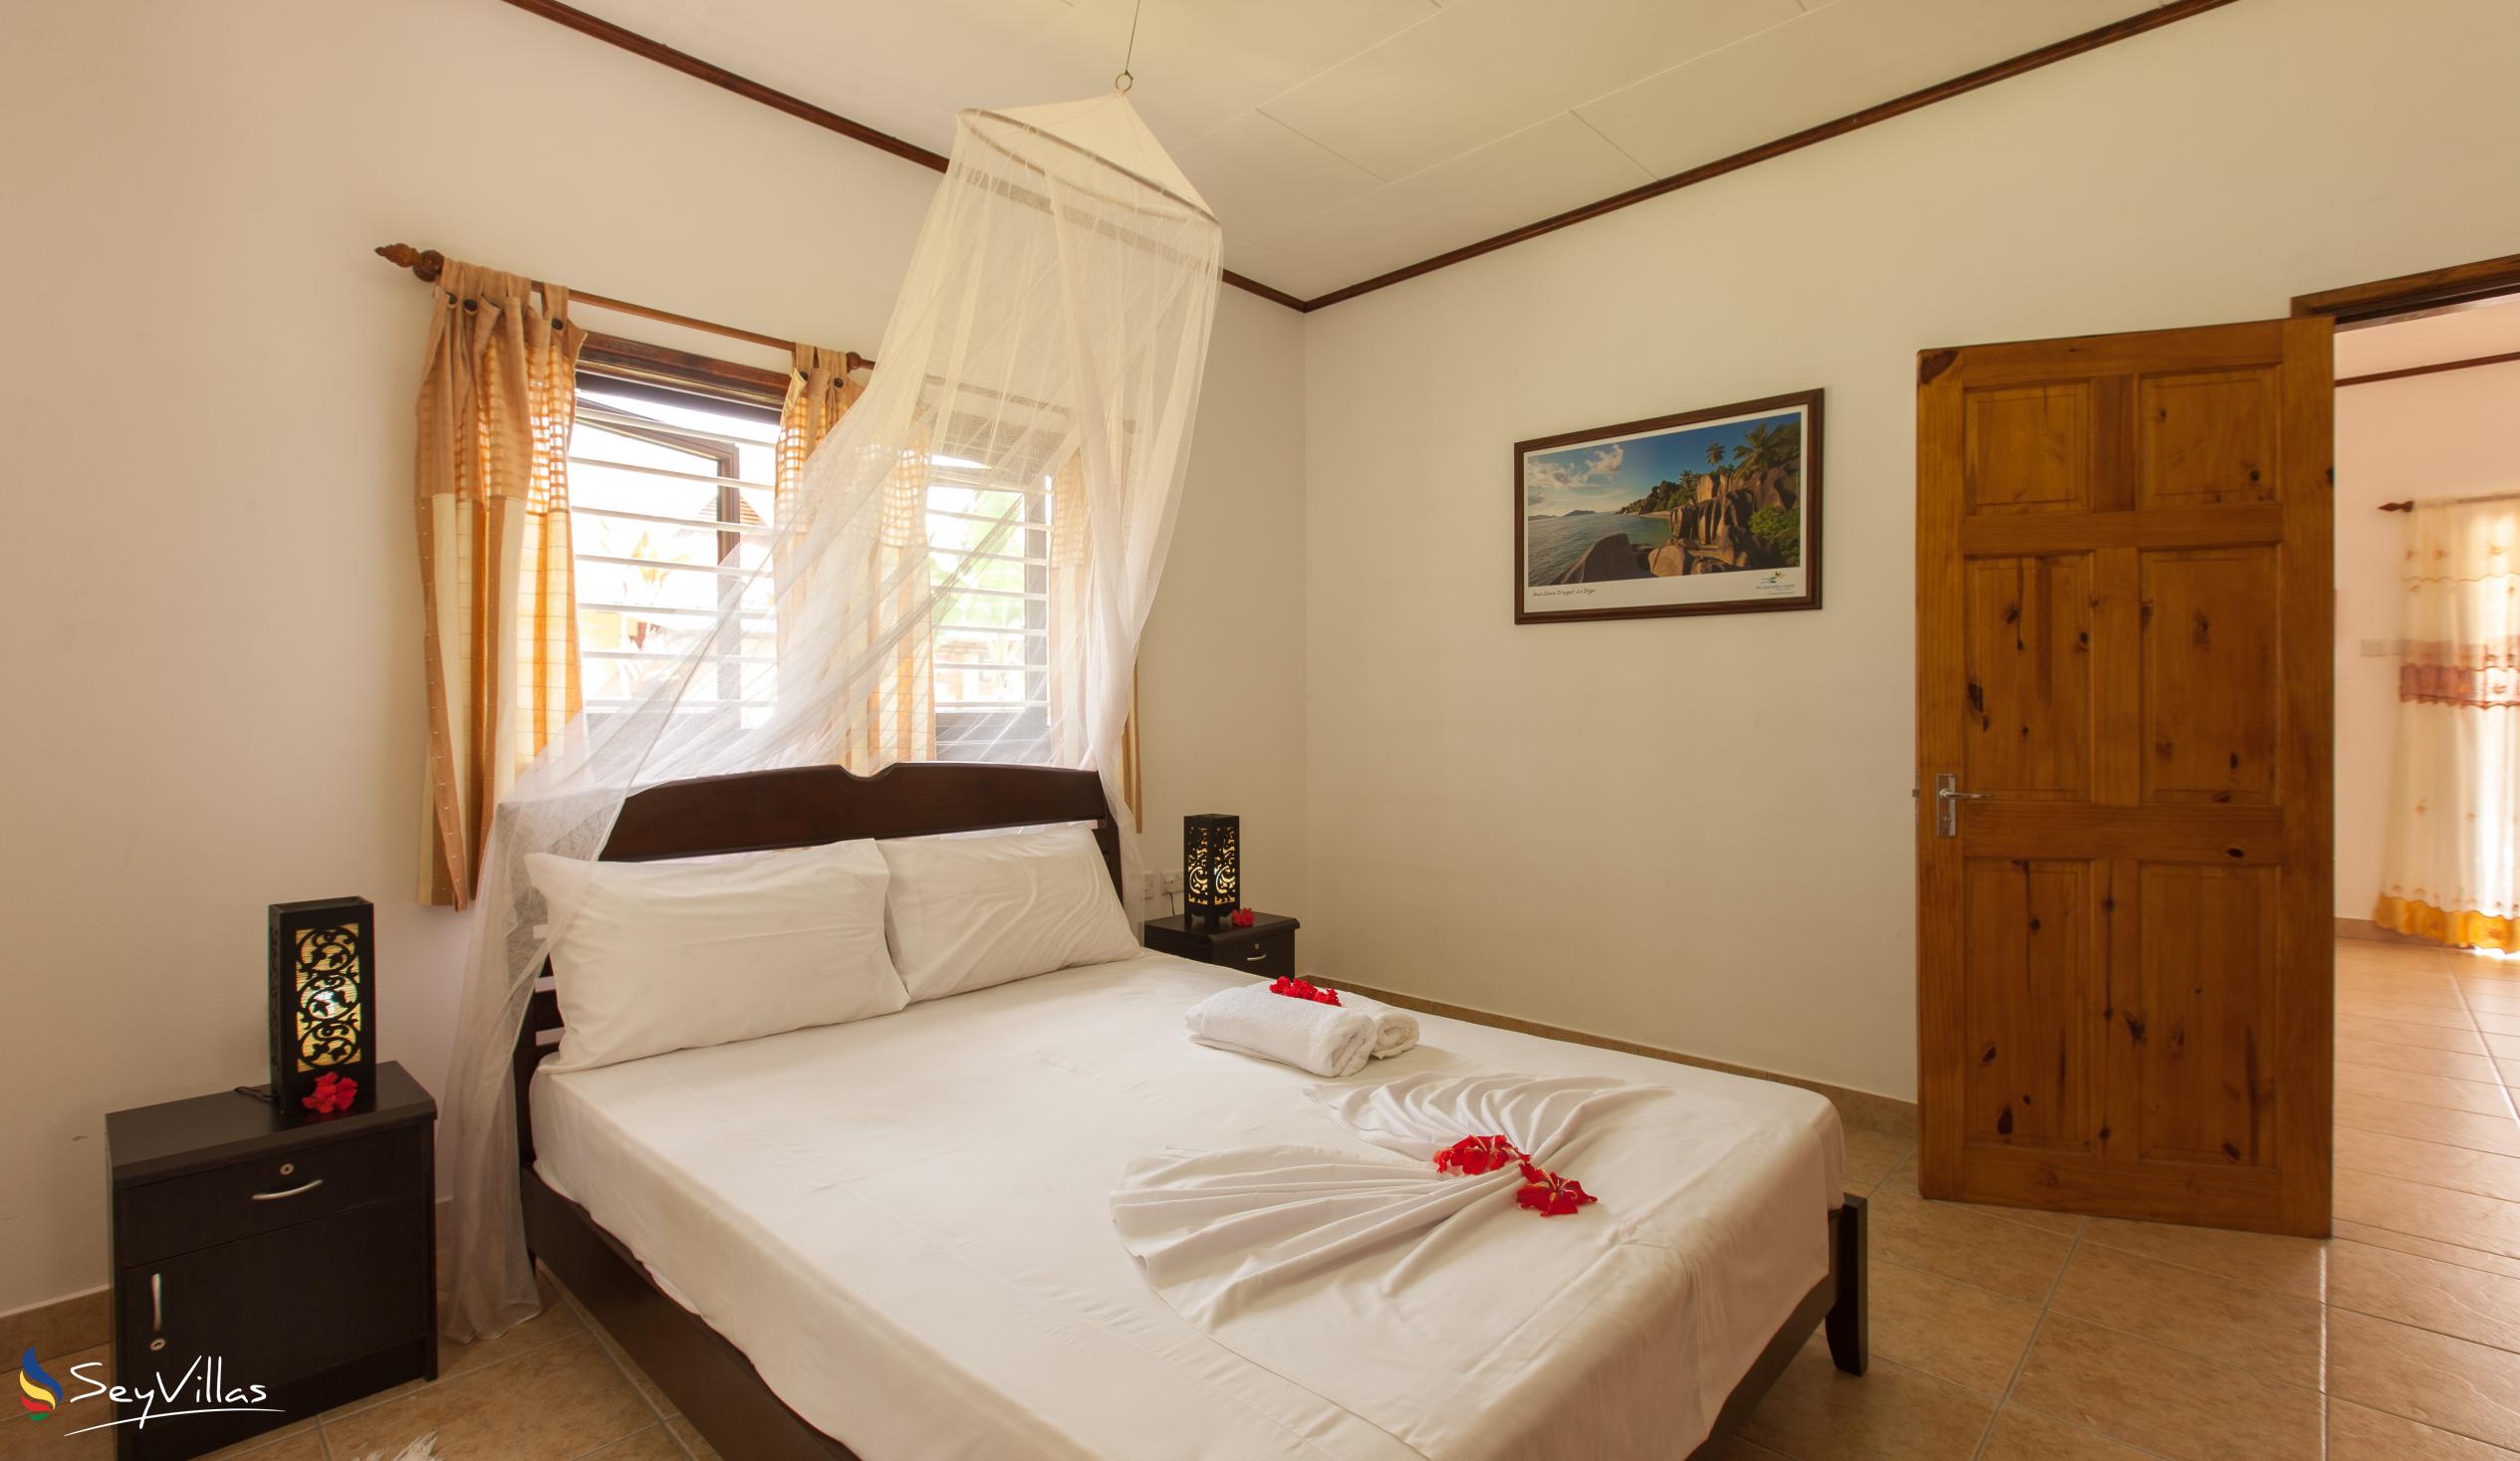 Foto 21: Zerof Self Catering  Apartments - Appartement à 1 chambre - La Digue (Seychelles)